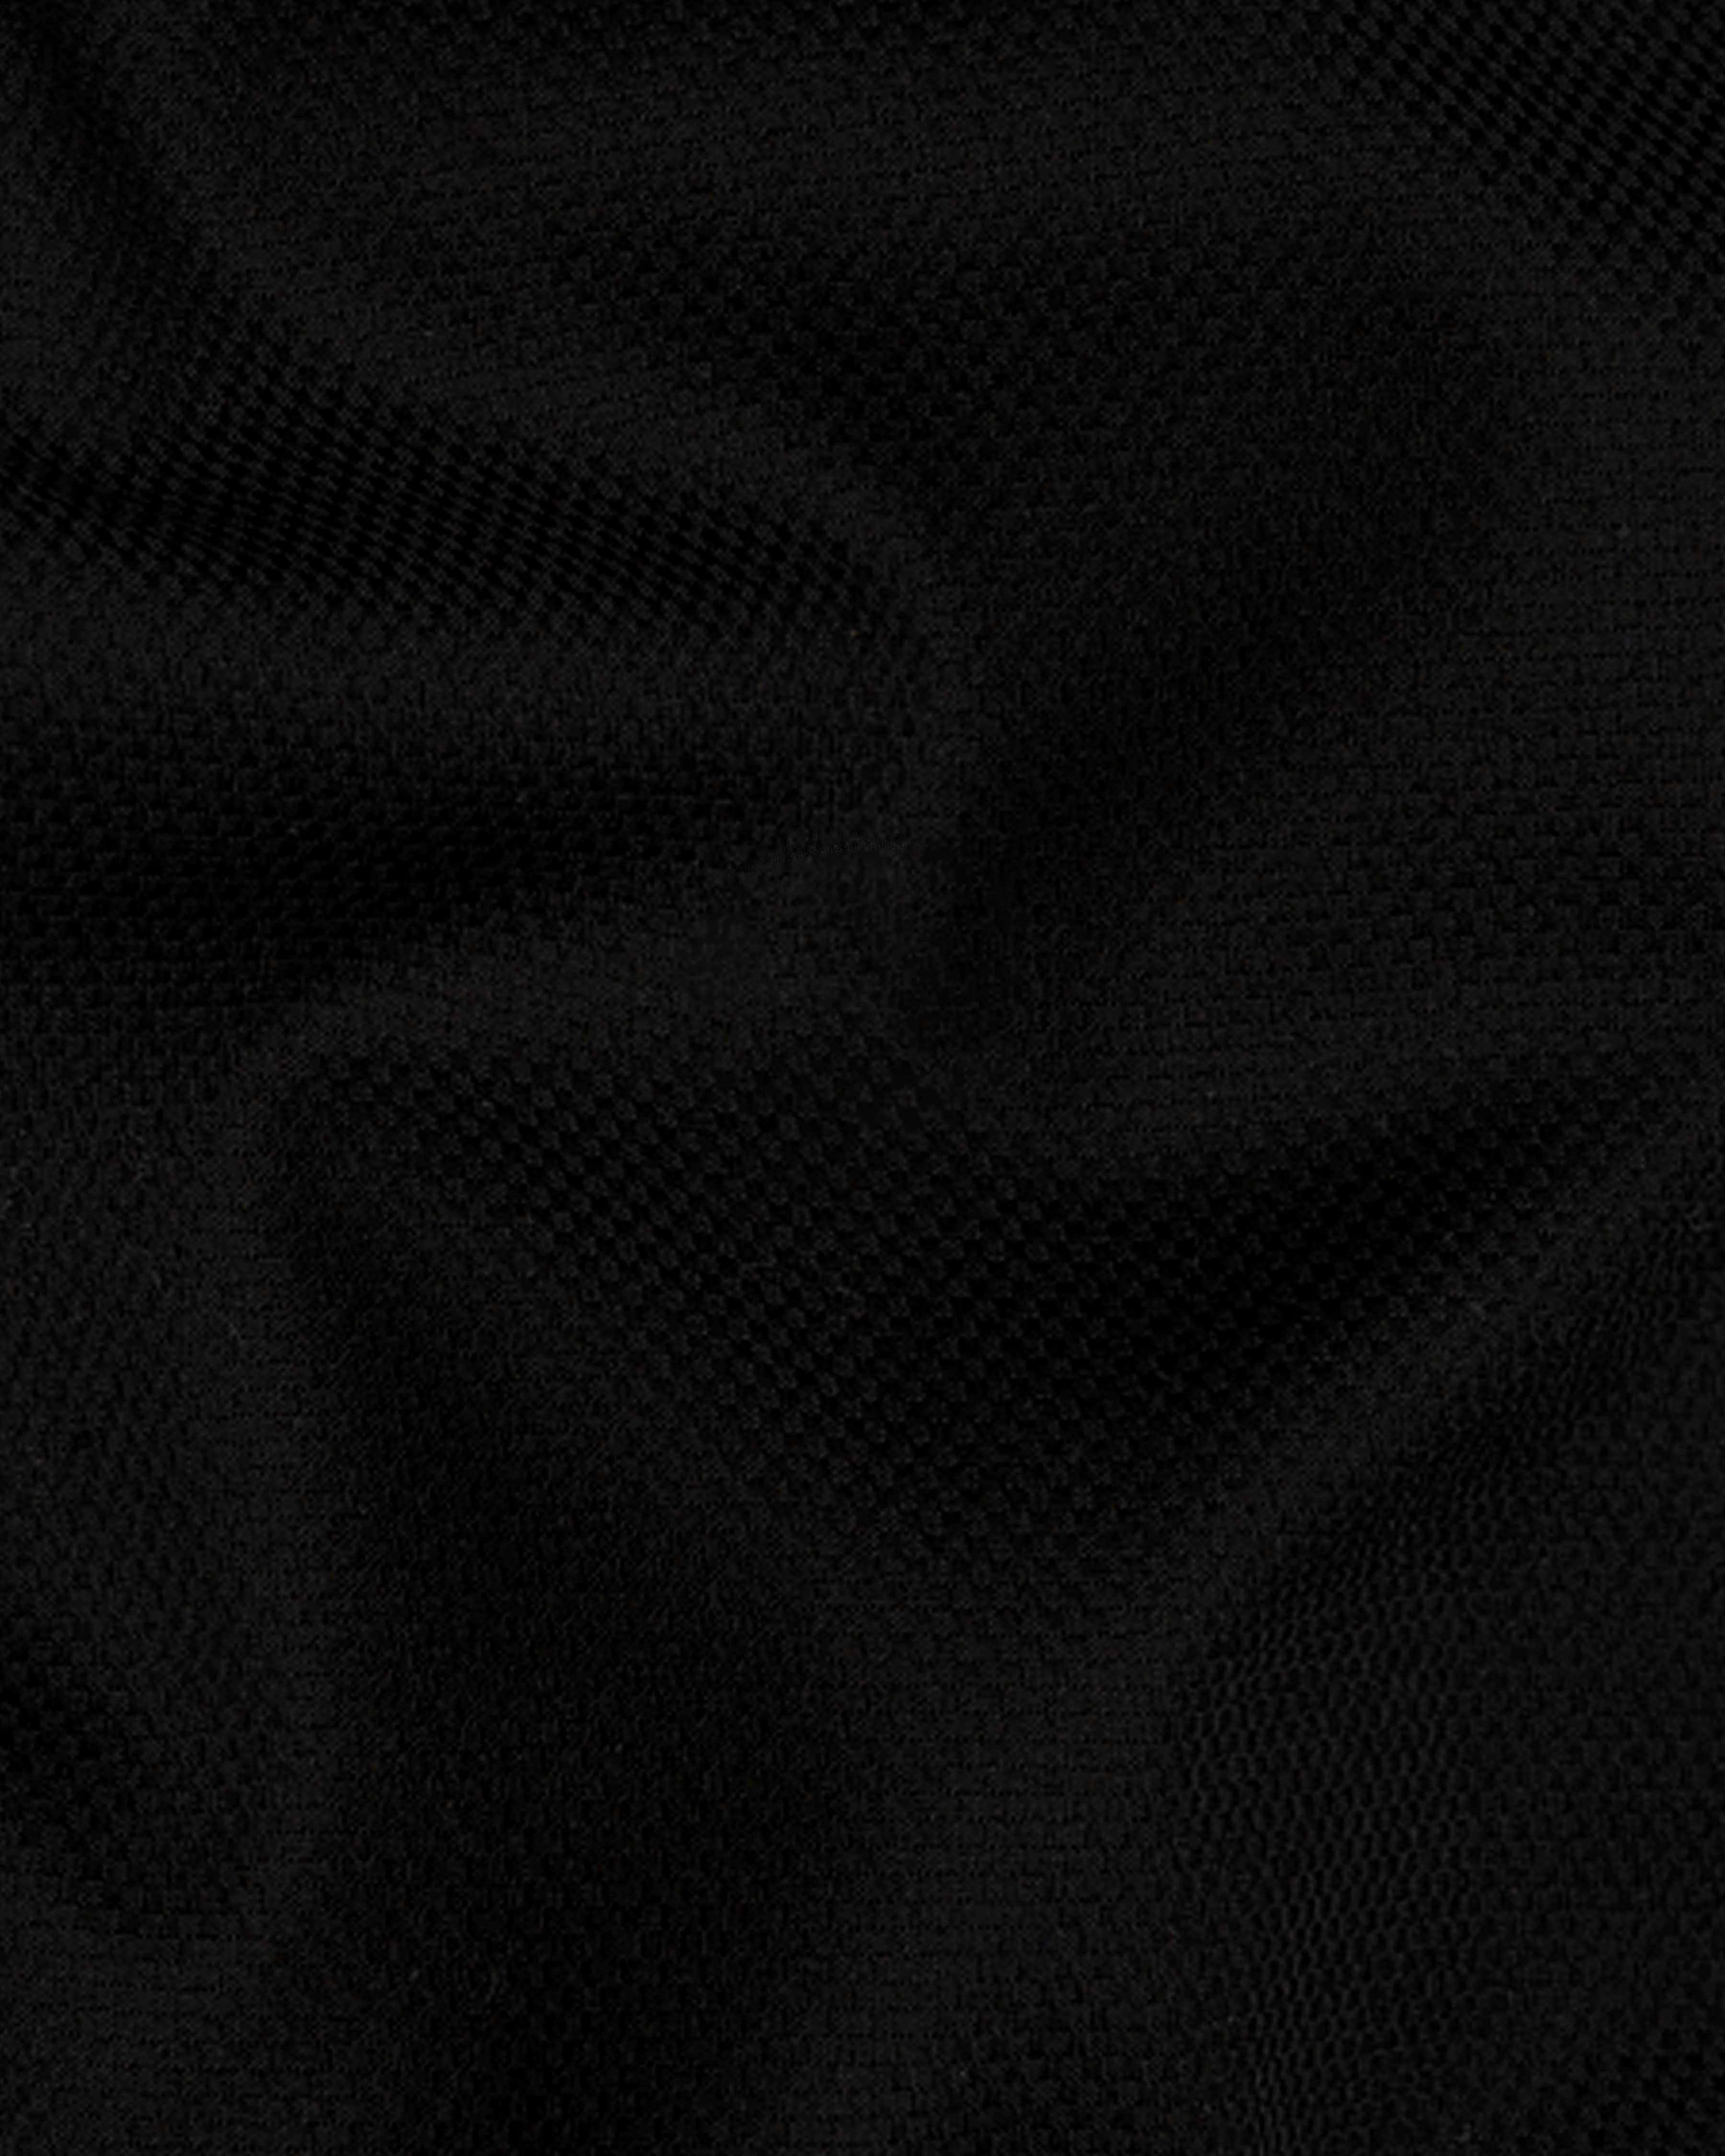 Jade Black Dobby Textured Premium Giza Cotton Shirt 9367-BLK-38, 9367-BLK-H-38, 9367-BLK-39, 9367-BLK-H-39, 9367-BLK-40, 9367-BLK-H-40, 9367-BLK-42, 9367-BLK-H-42, 9367-BLK-44, 9367-BLK-H-44, 9367-BLK-46, 9367-BLK-H-46, 9367-BLK-48, 9367-BLK-H-48, 9367-BLK-50, 9367-BLK-H-50, 9367-BLK-52, 9367-BLK-H-52